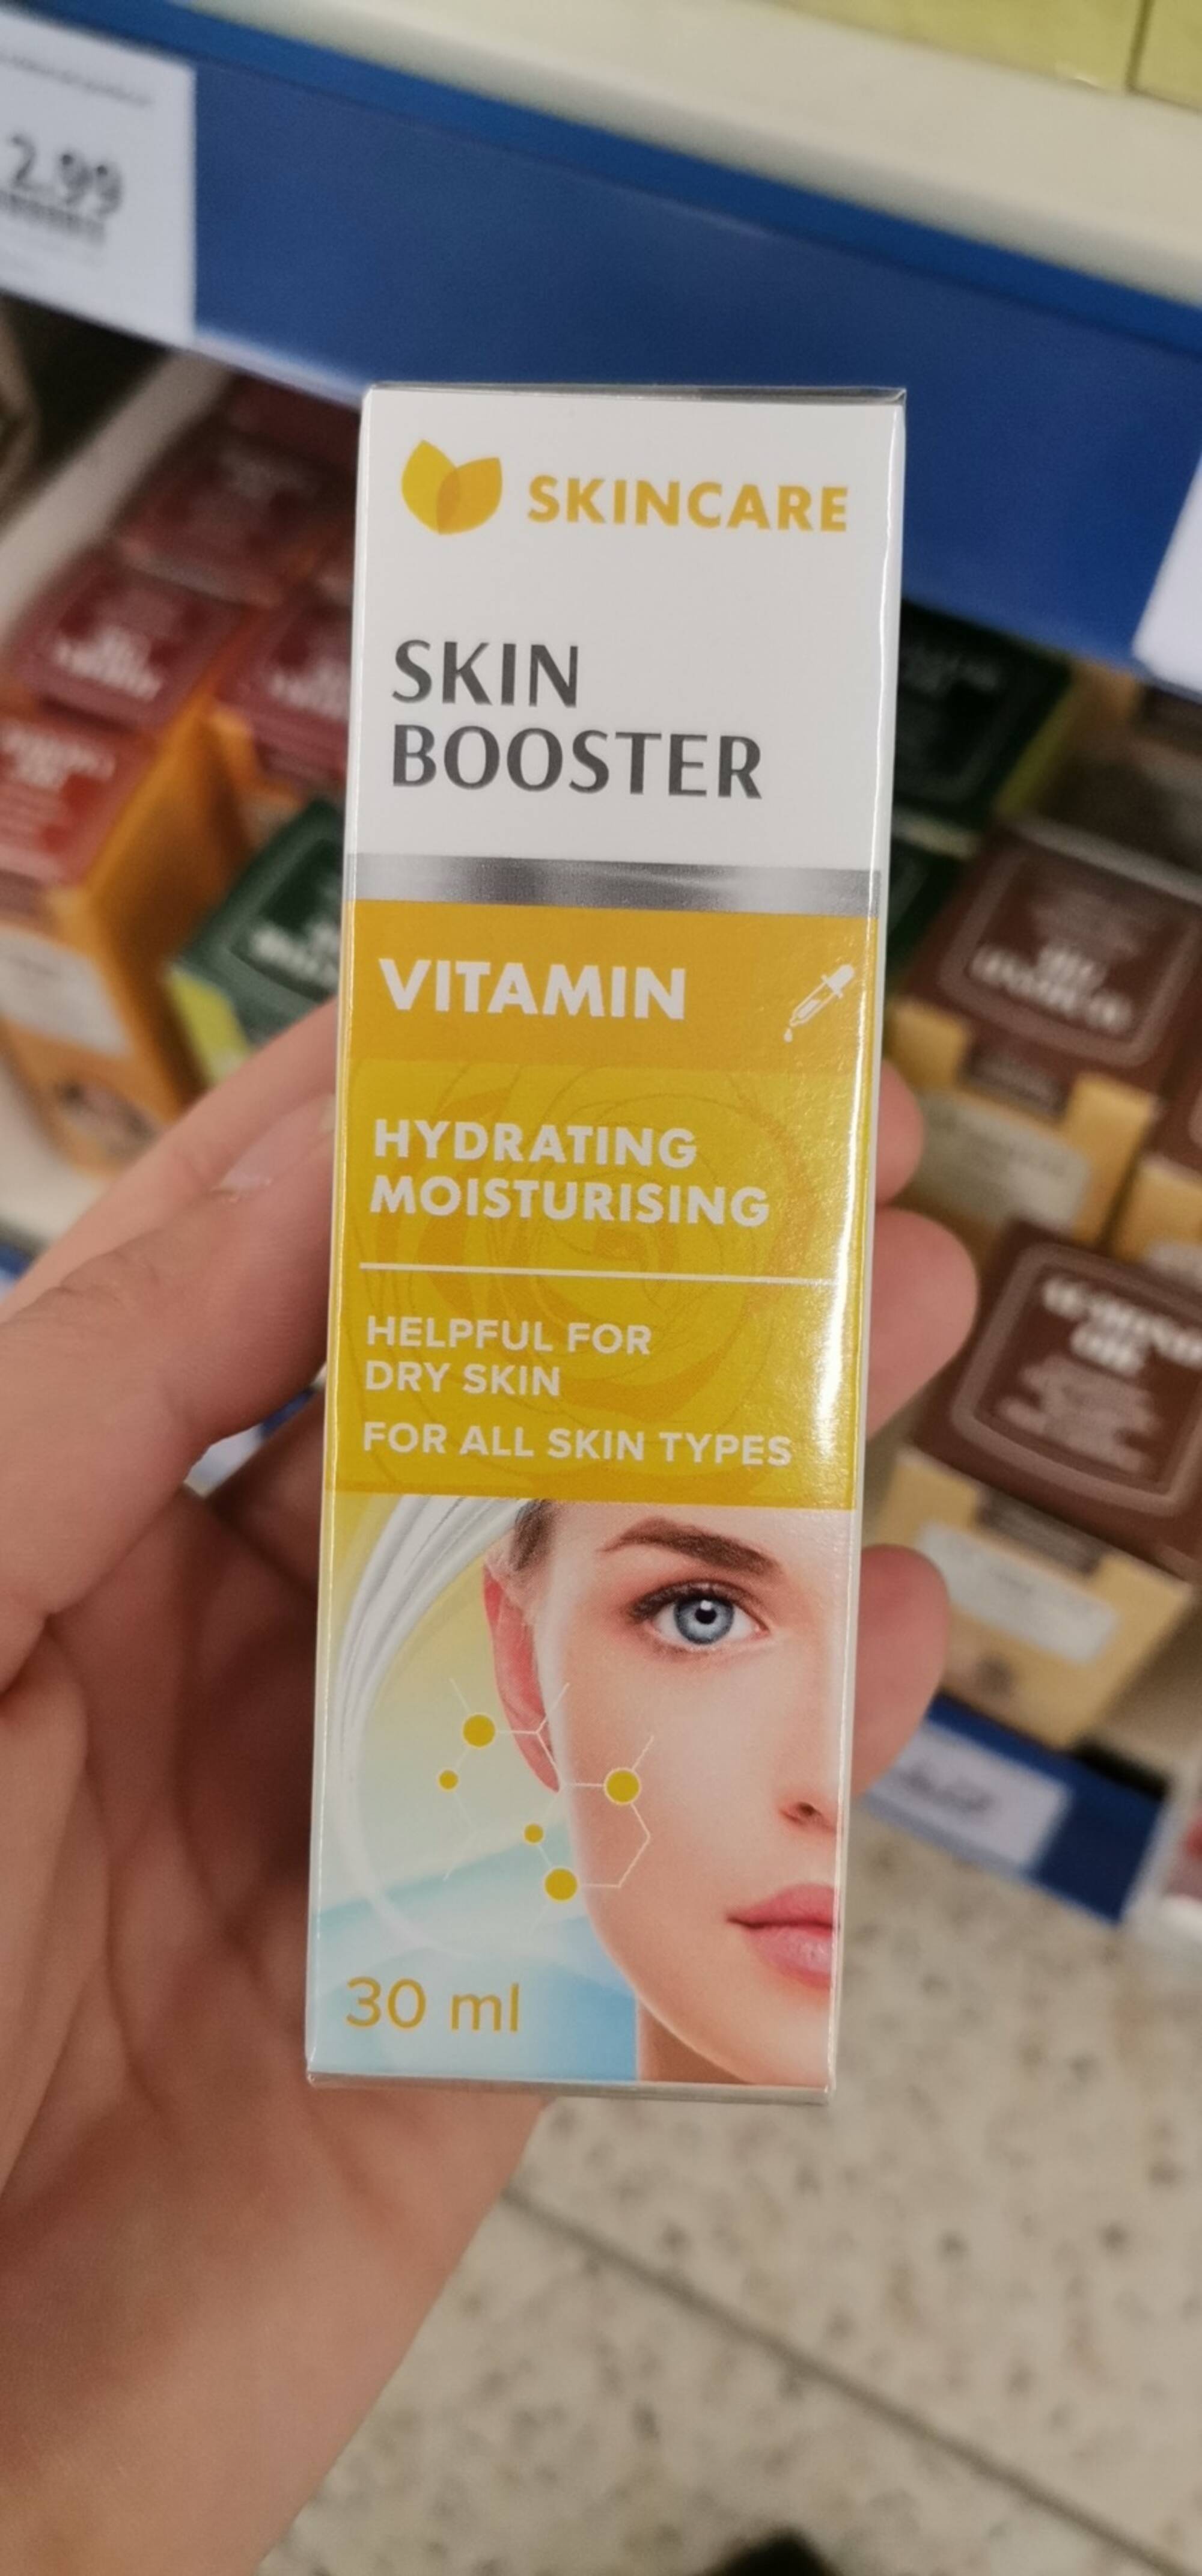 SKINCARE - Skin booster Vitamin - Hydrating moisturising